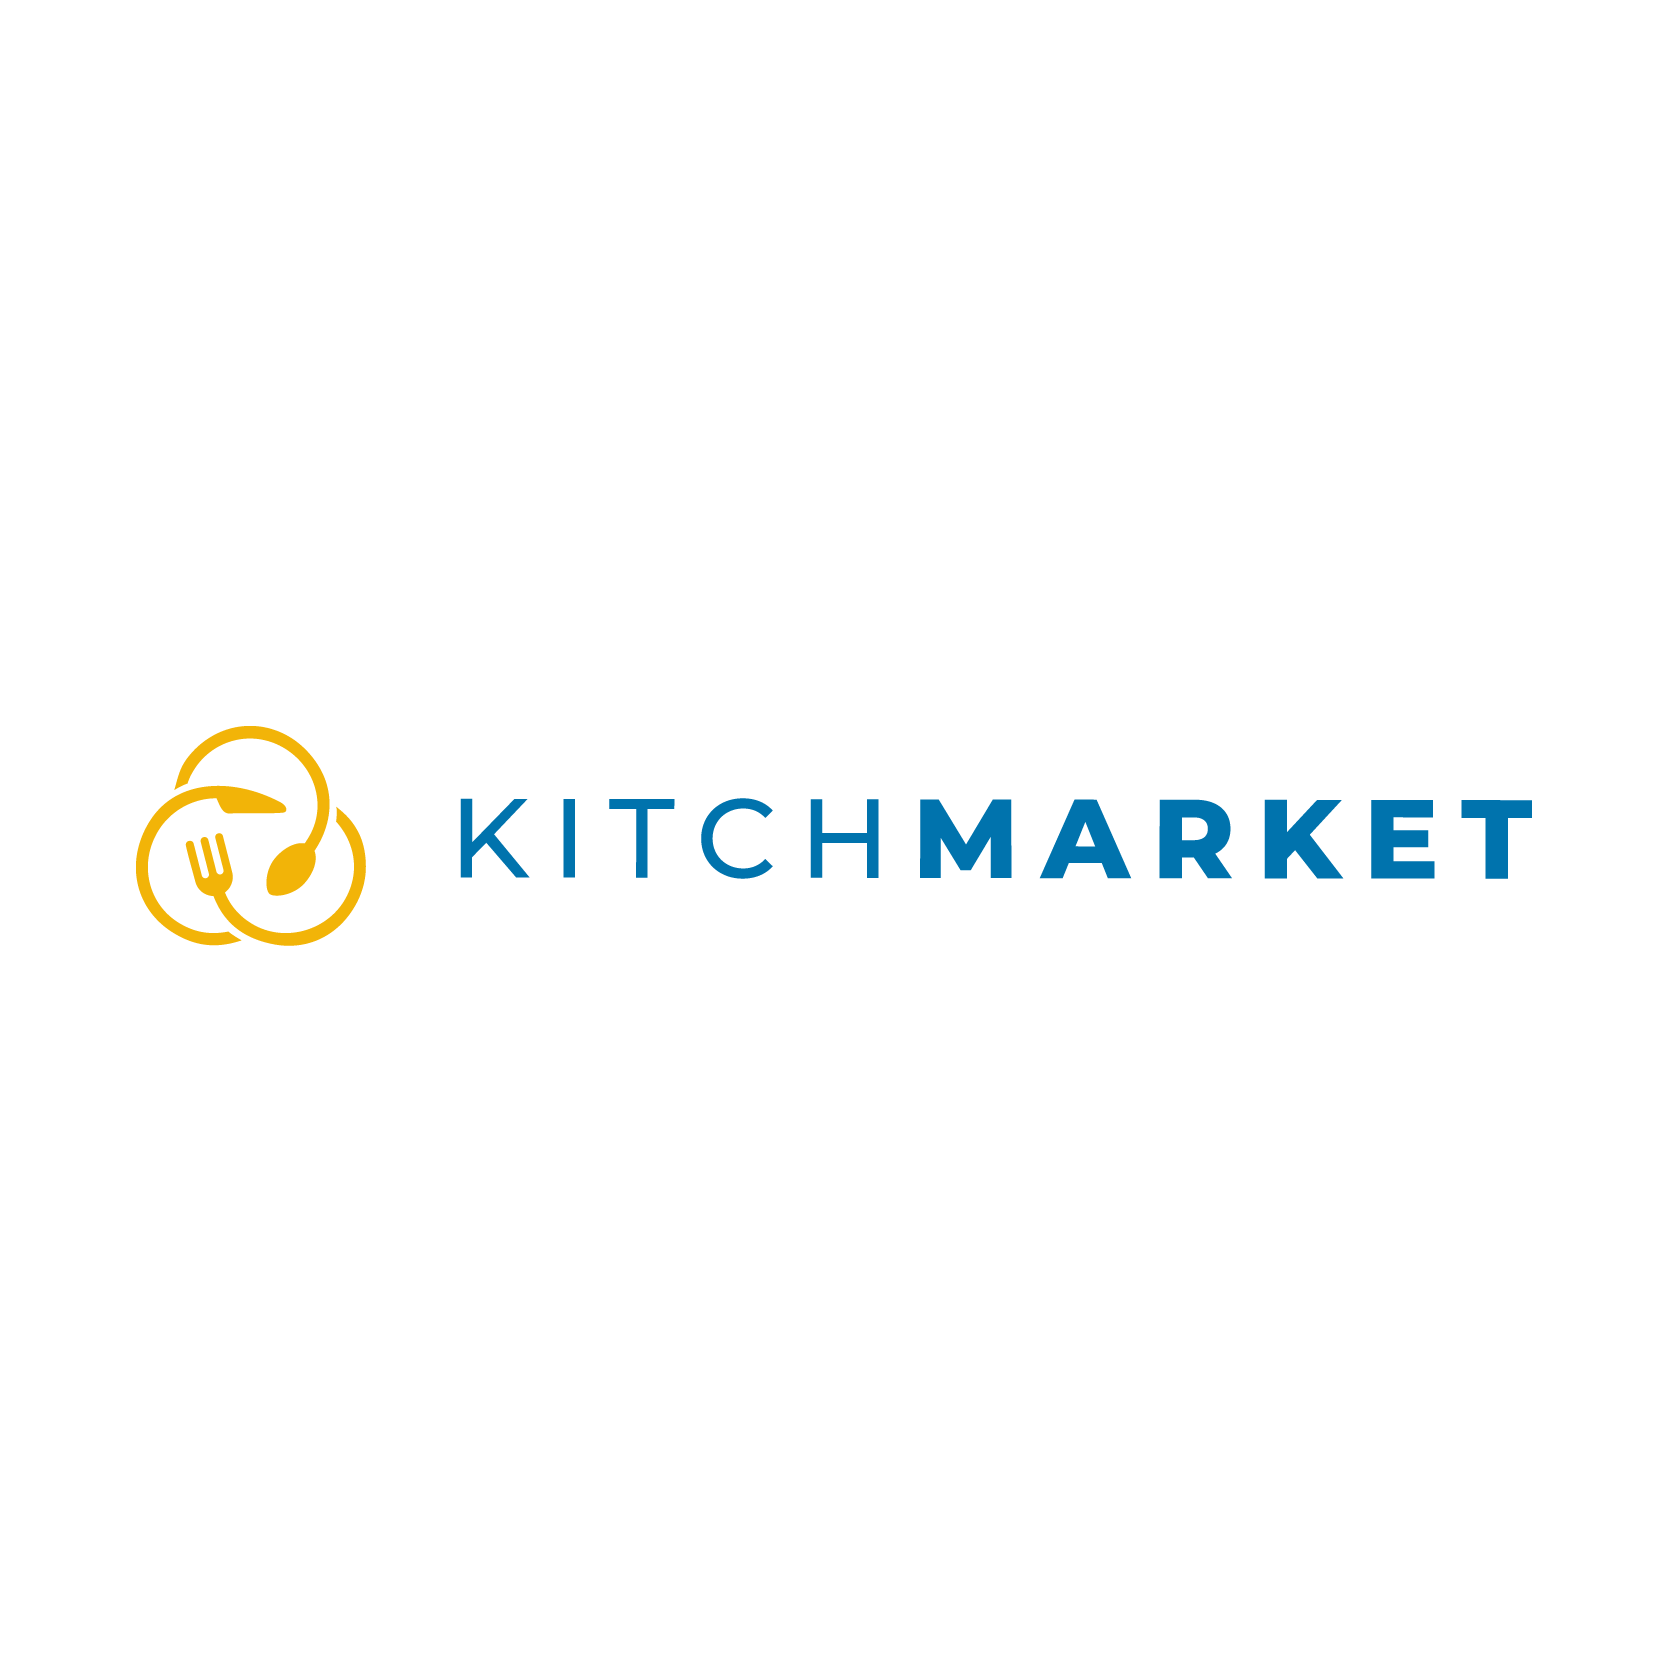 KitchMarket